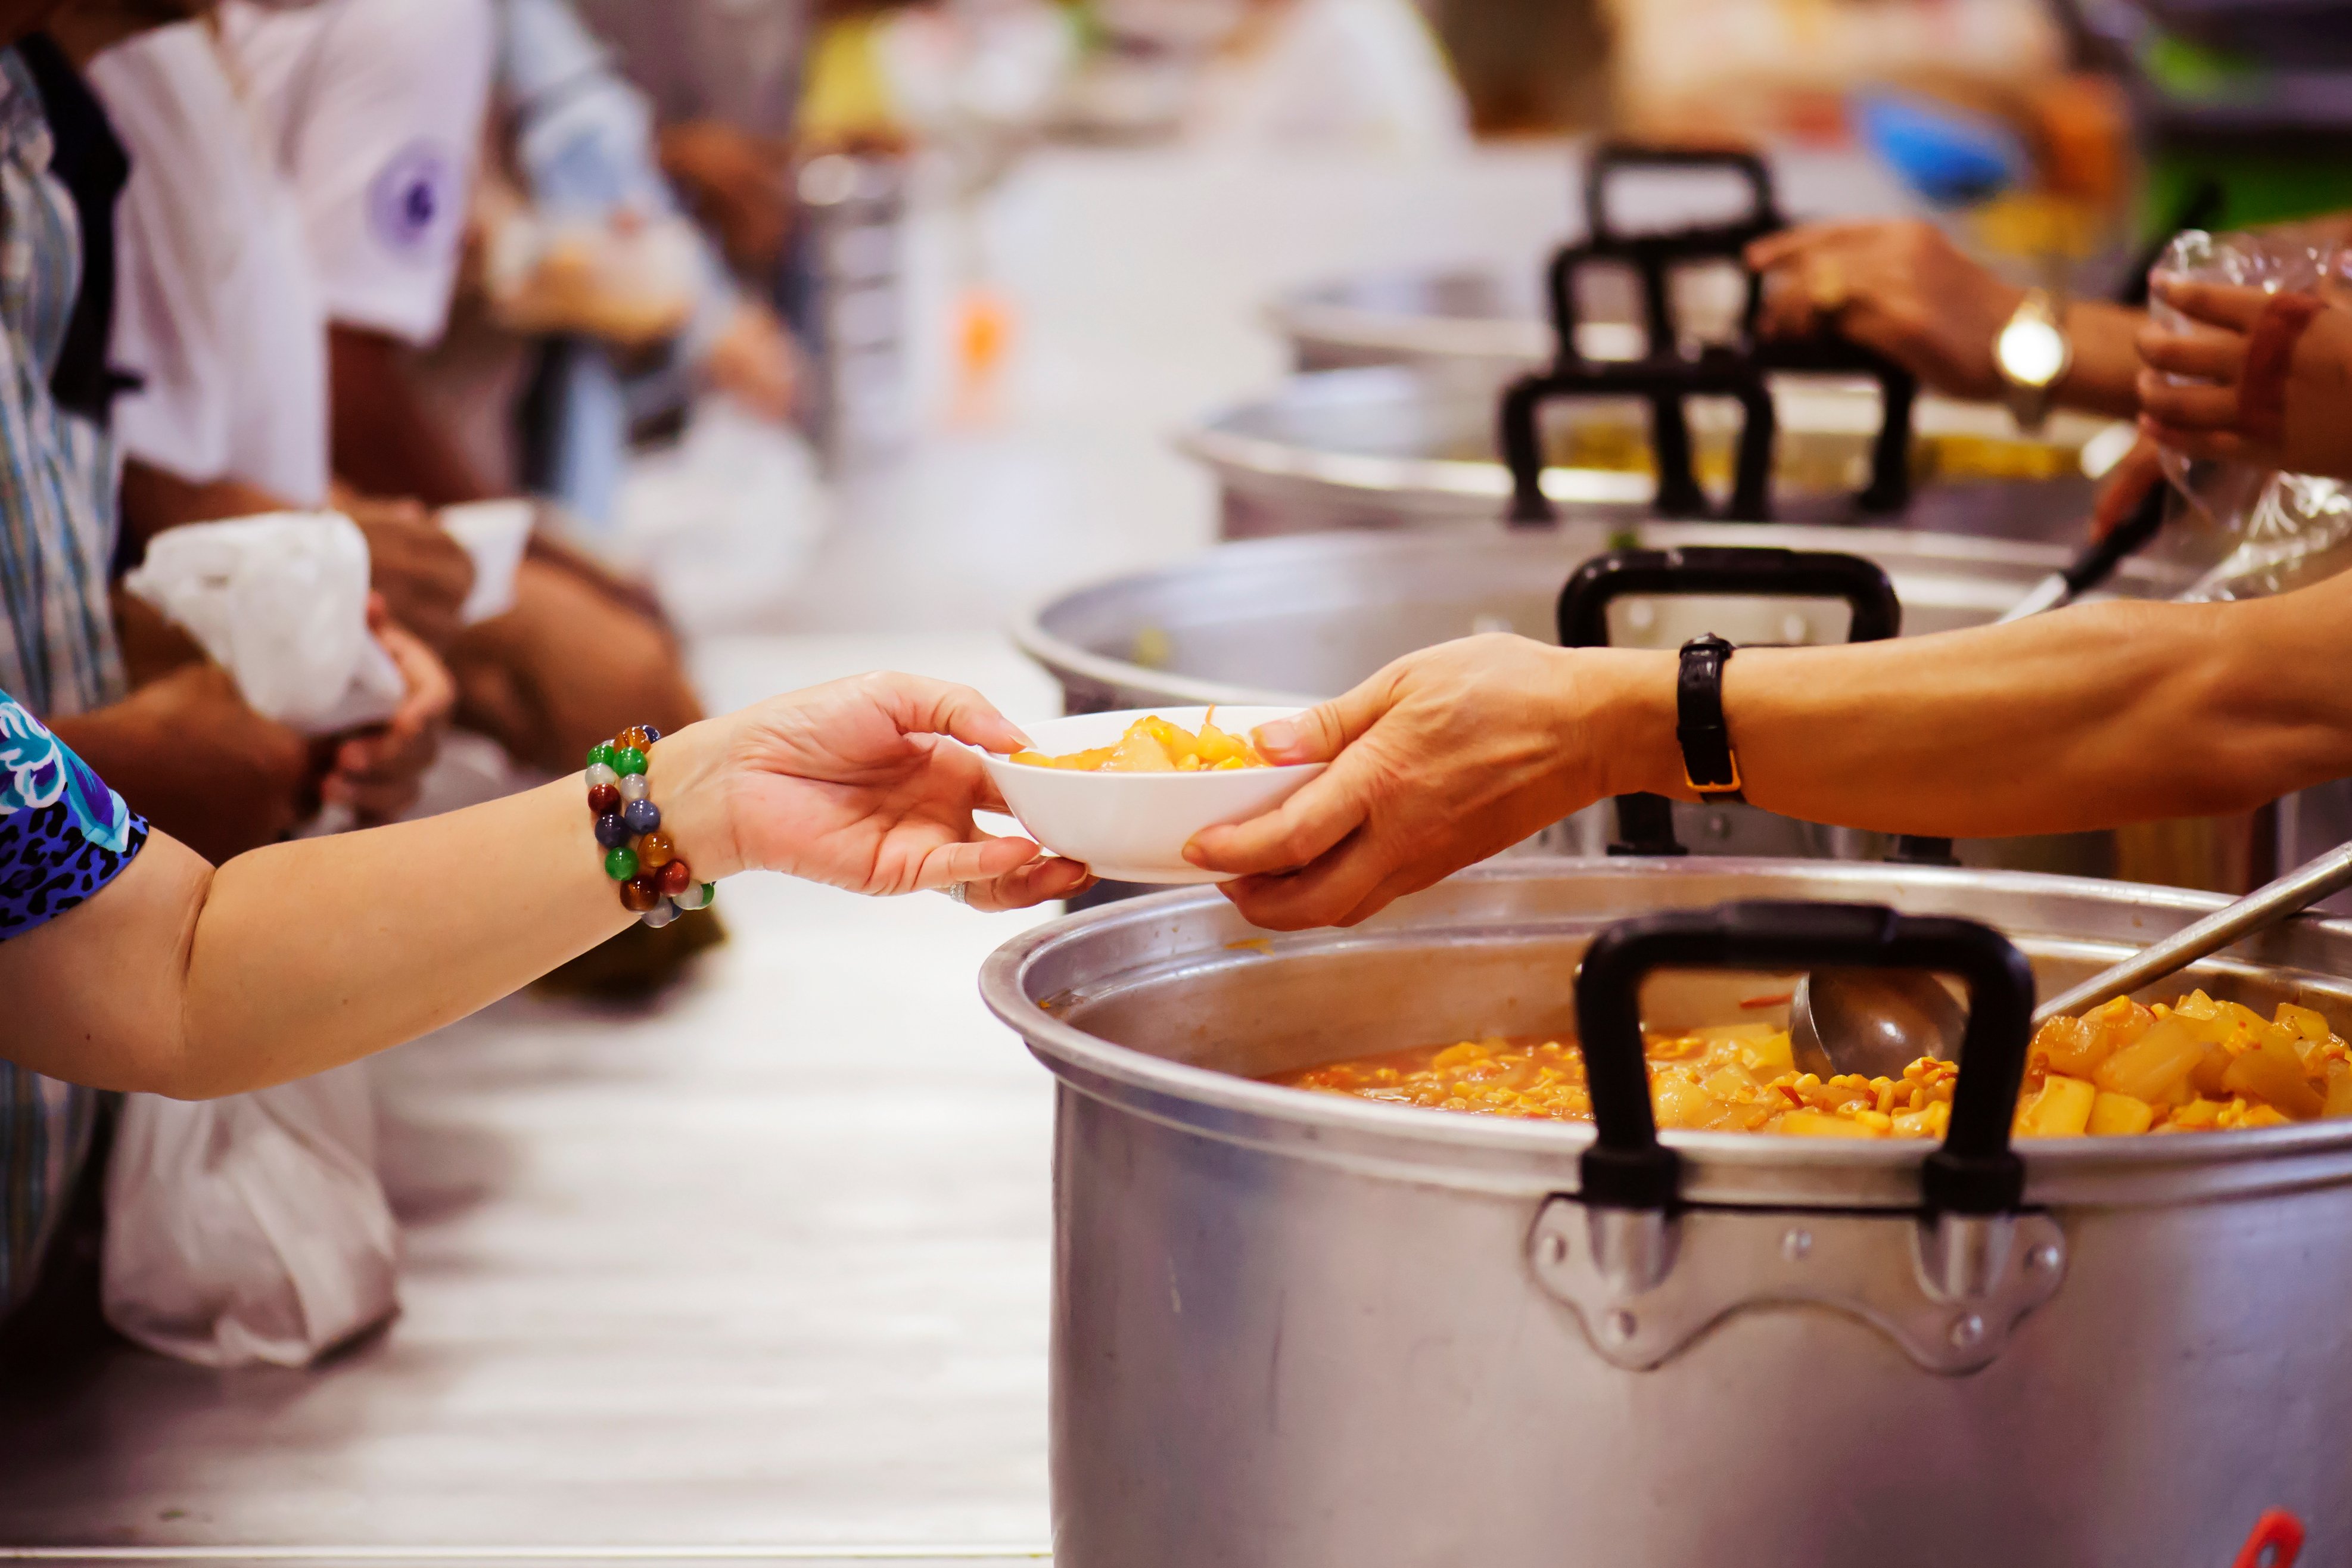 Comedor gratuito para desamparados. | Foto: Shutterstock